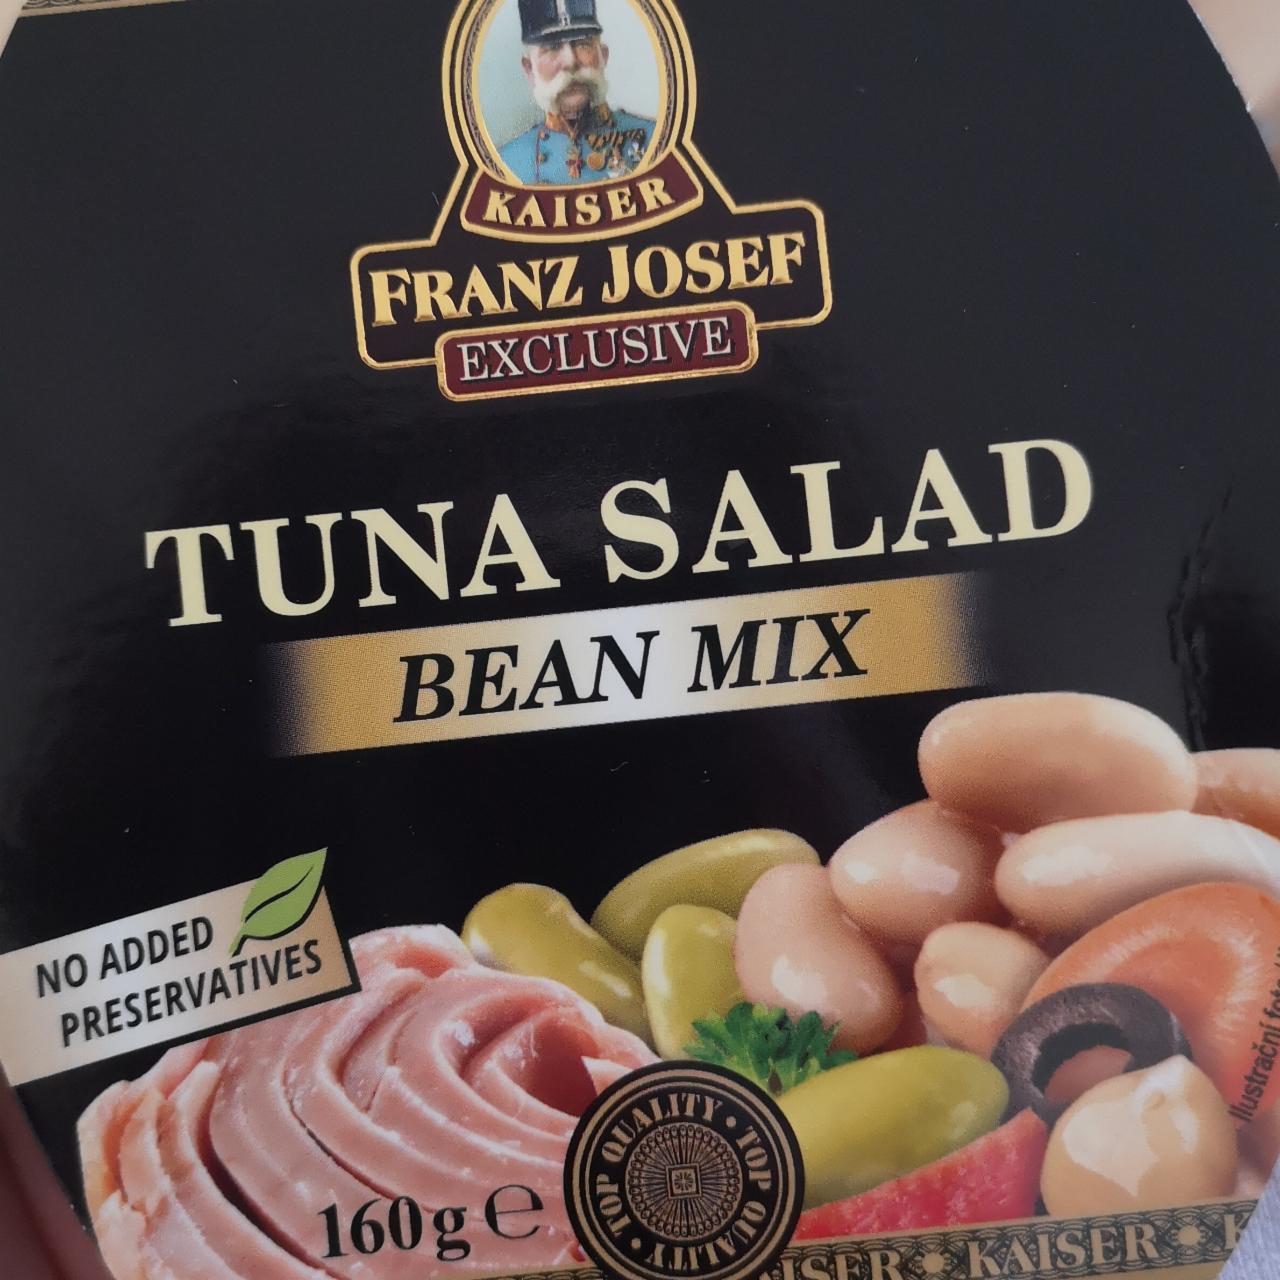 Fotografie - Tuna salad Bean mix Kaiser Franz Josef Exclusive